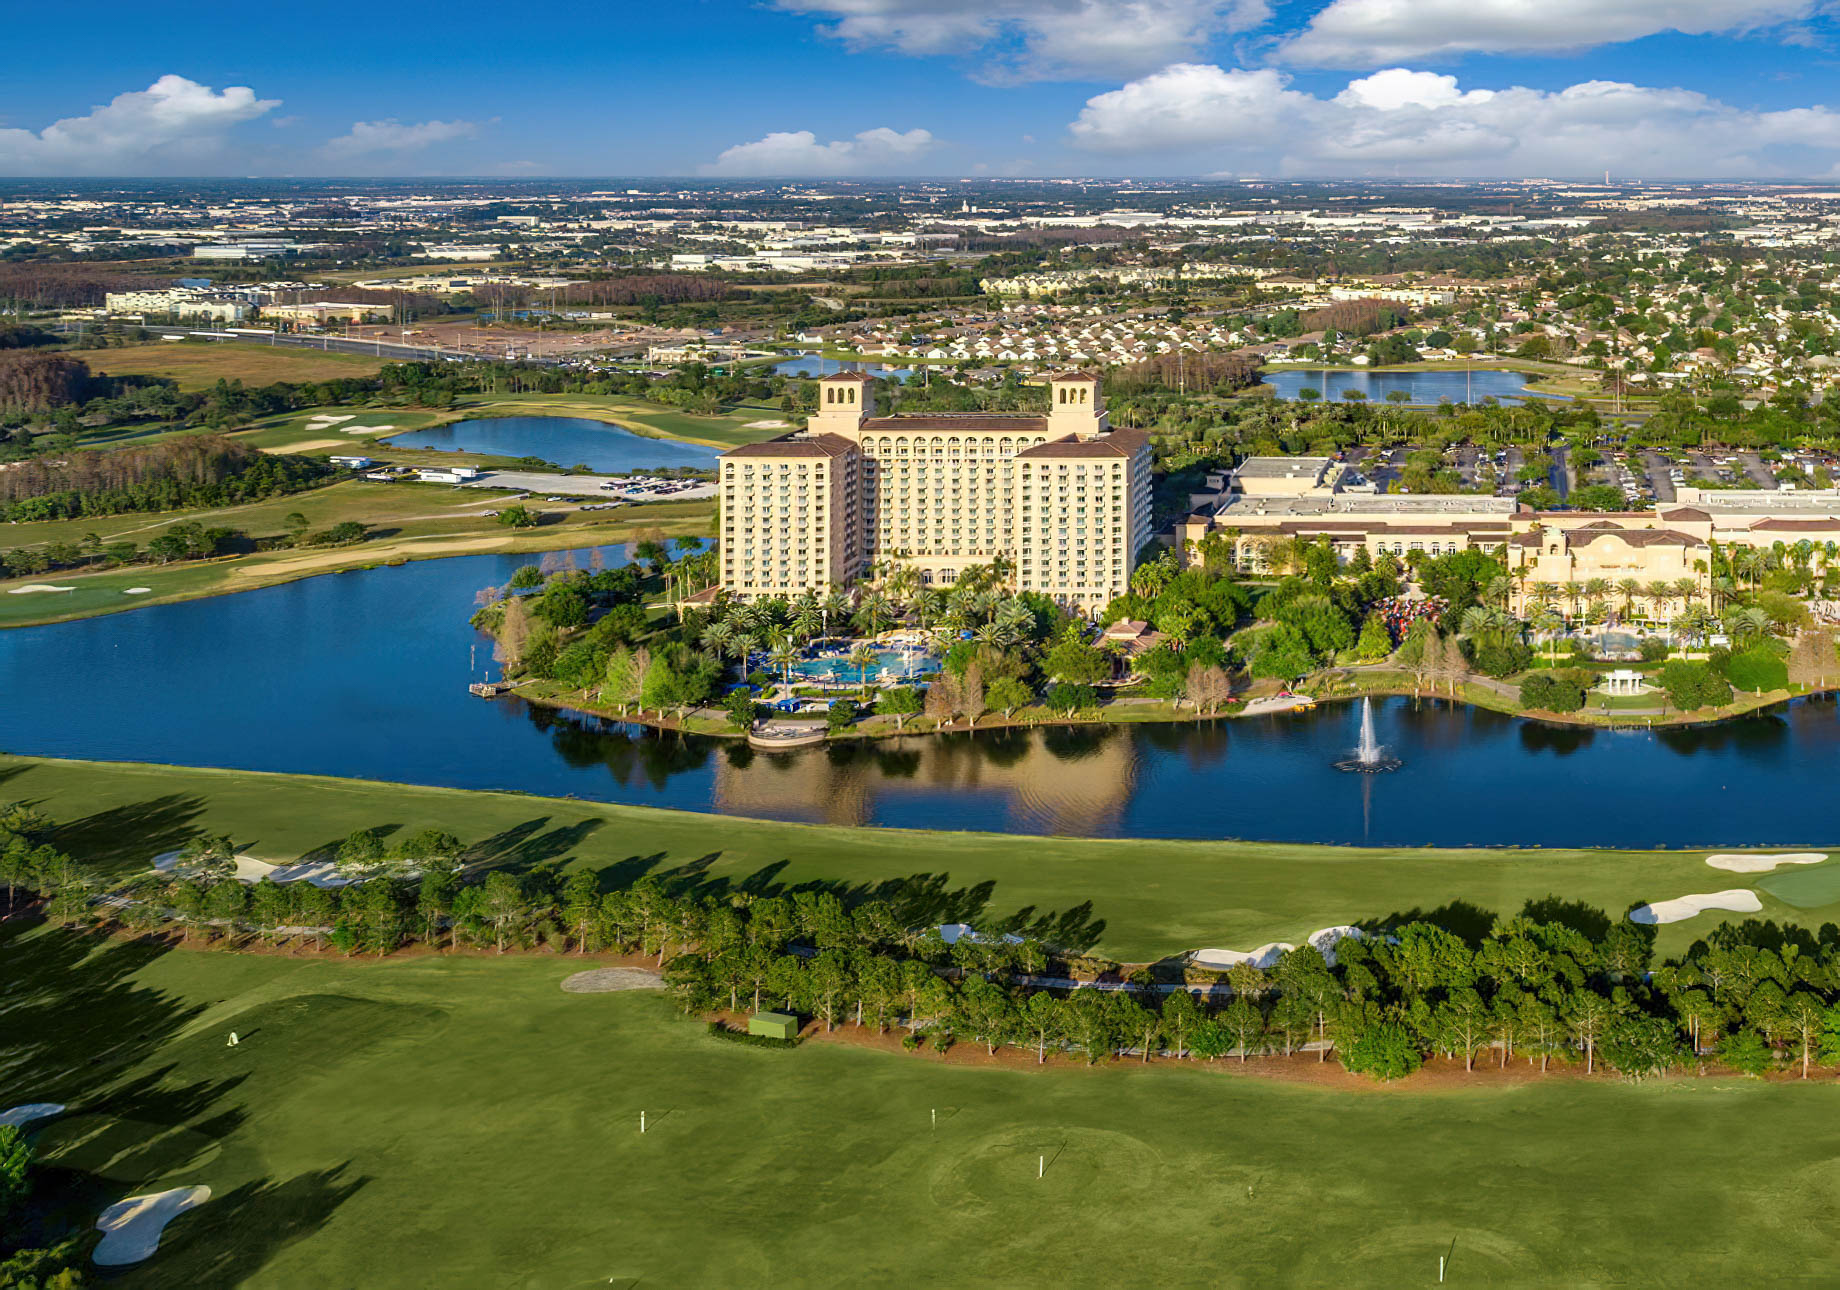 The Ritz-Carlton Orlando, Grande Lakes Resort - Orlando, FL, USA - Exterior Aerial